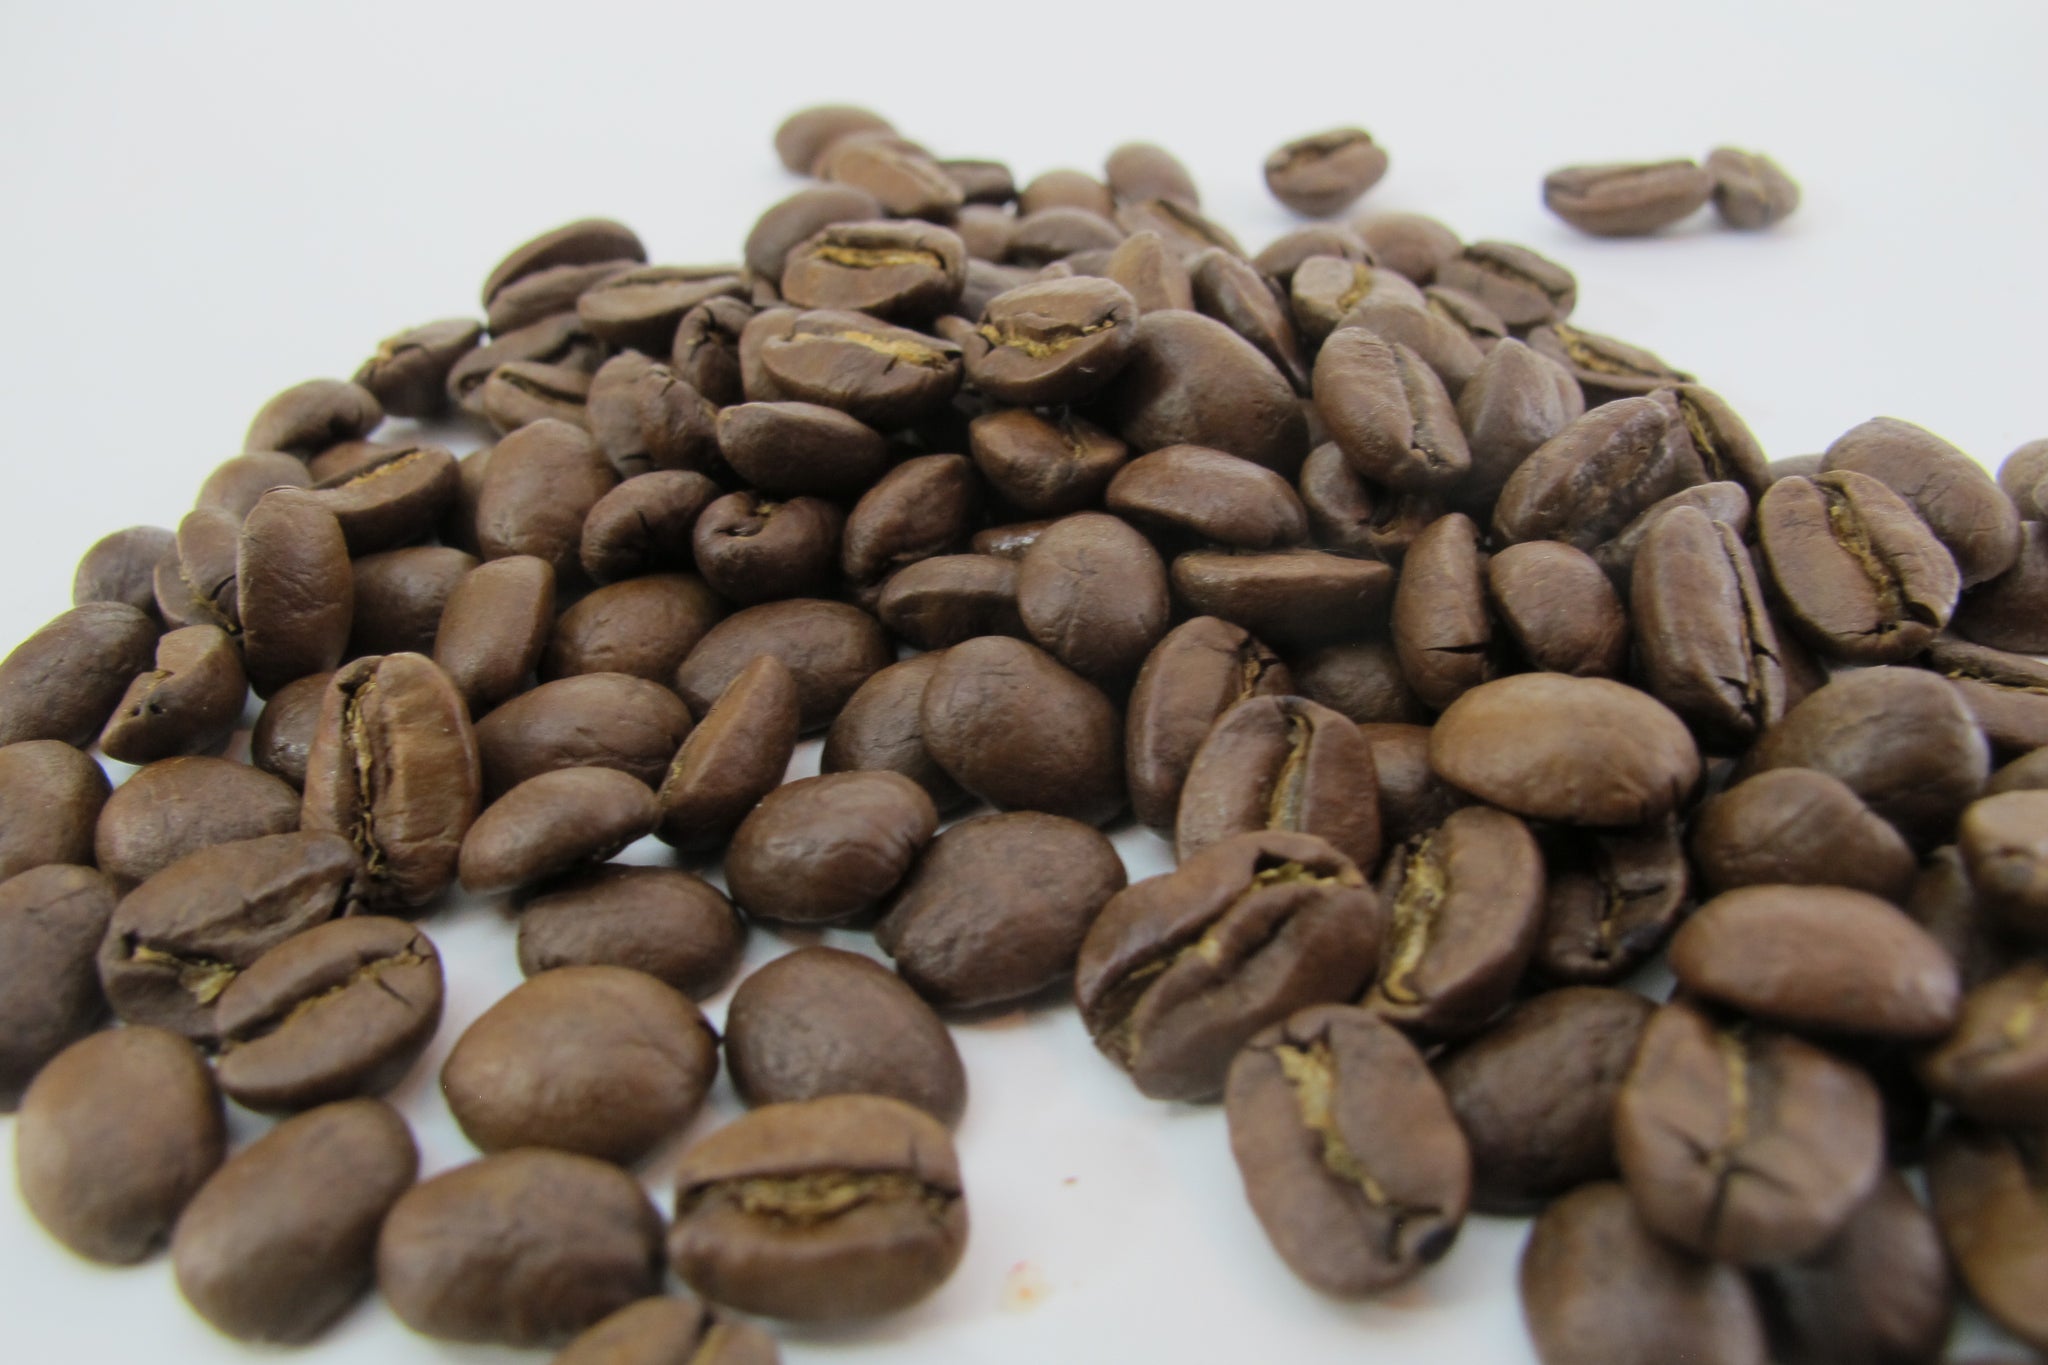 100% Jamaica Blue Mountain Coffee - Amber Estate